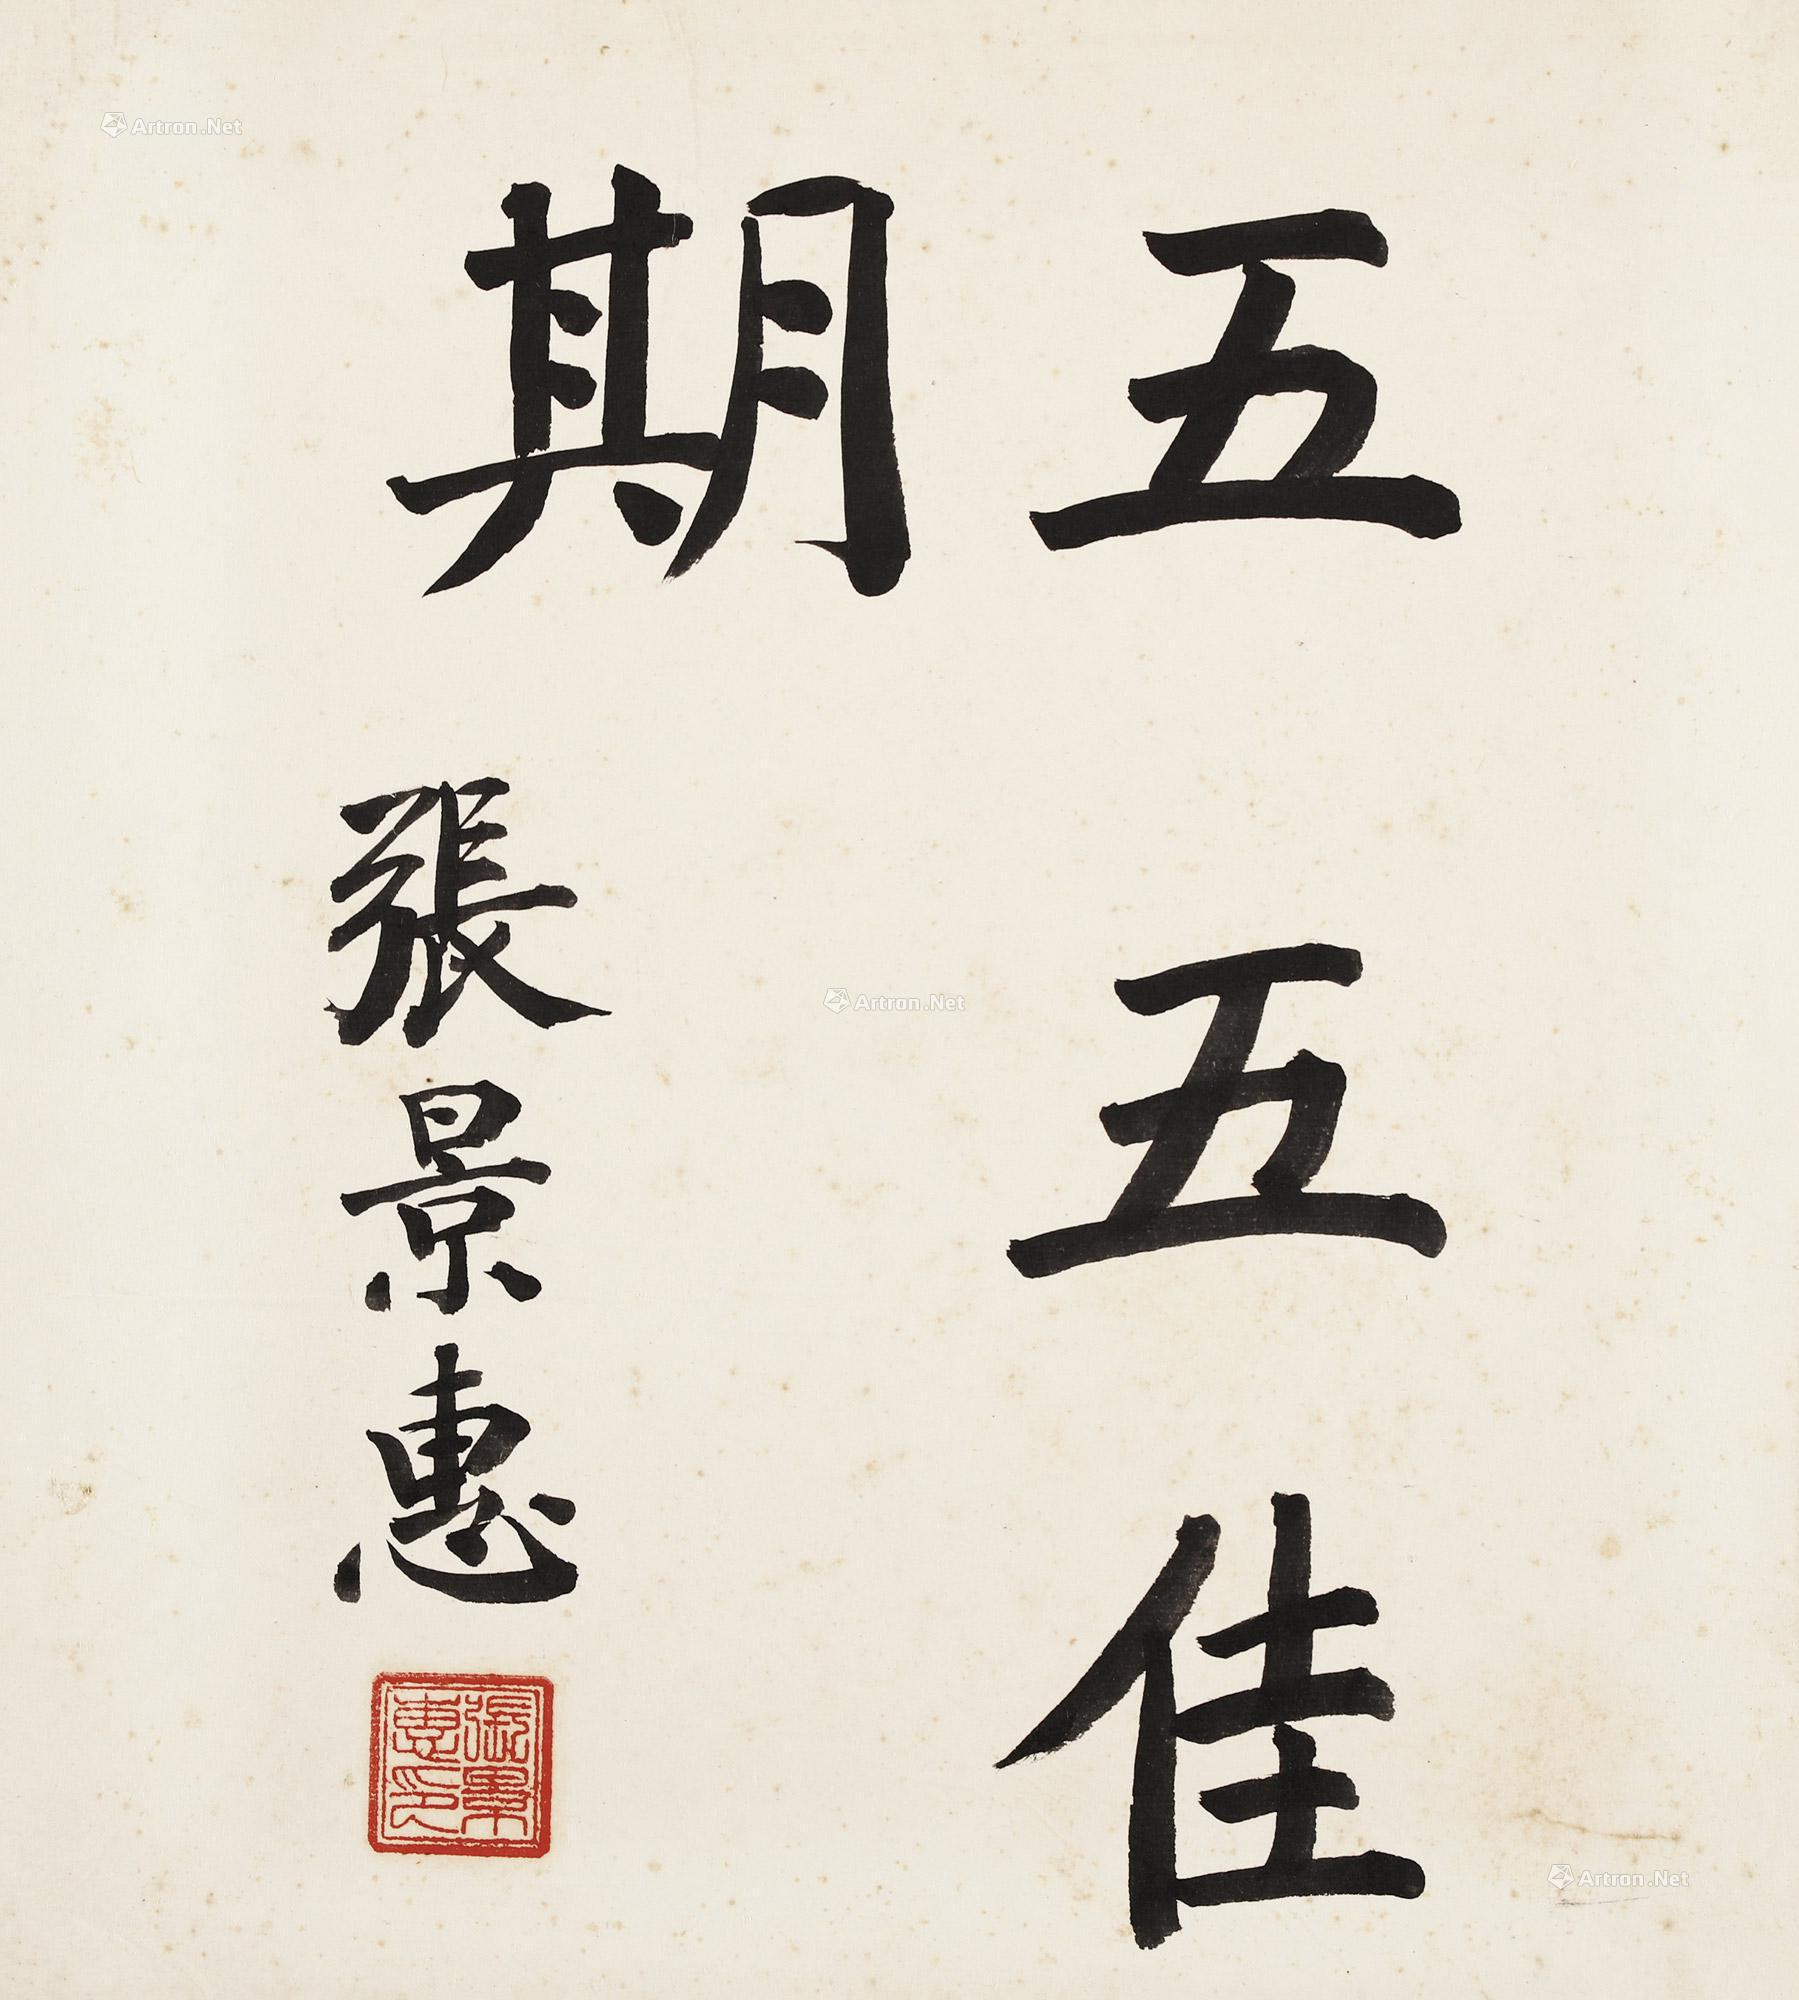 Calligraphy by Zhang Jinghui